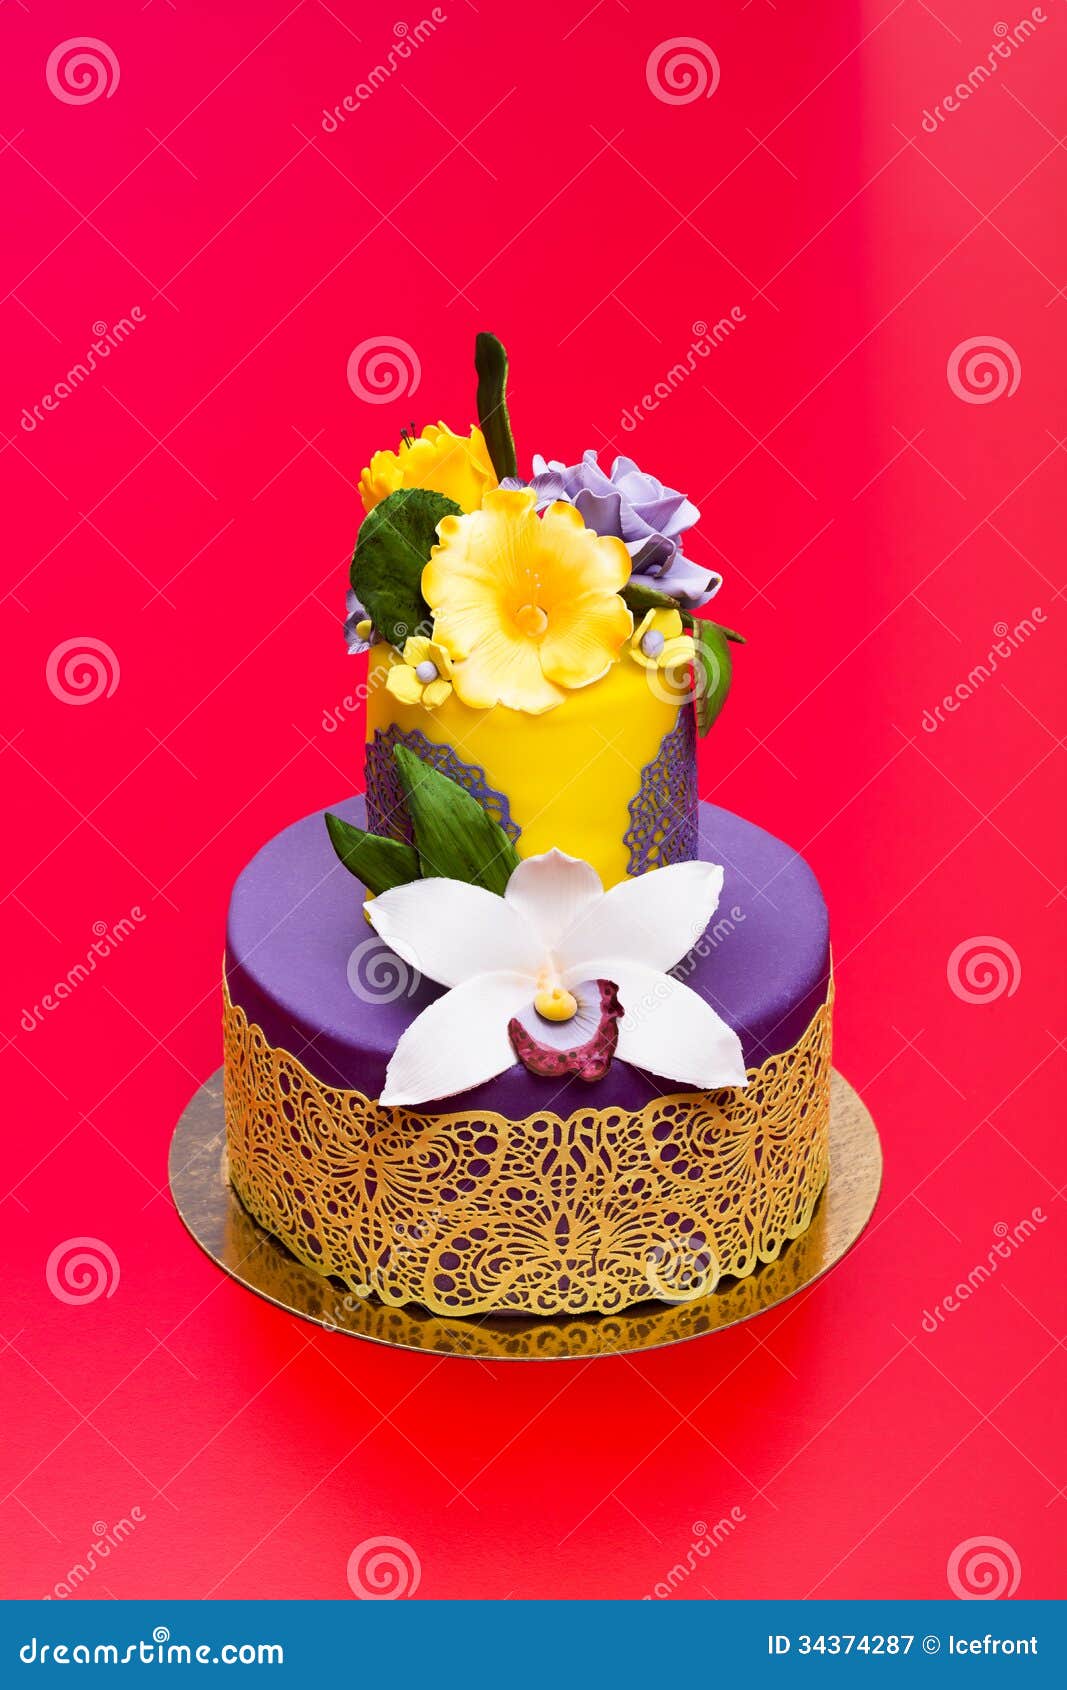 Kleurrijke die cake met suikergoedbloemen en kant wordt verfraaid. Kleurrijke purper-gele die cake met eetbaar suikergoedbloemen en kant wordt verfraaid